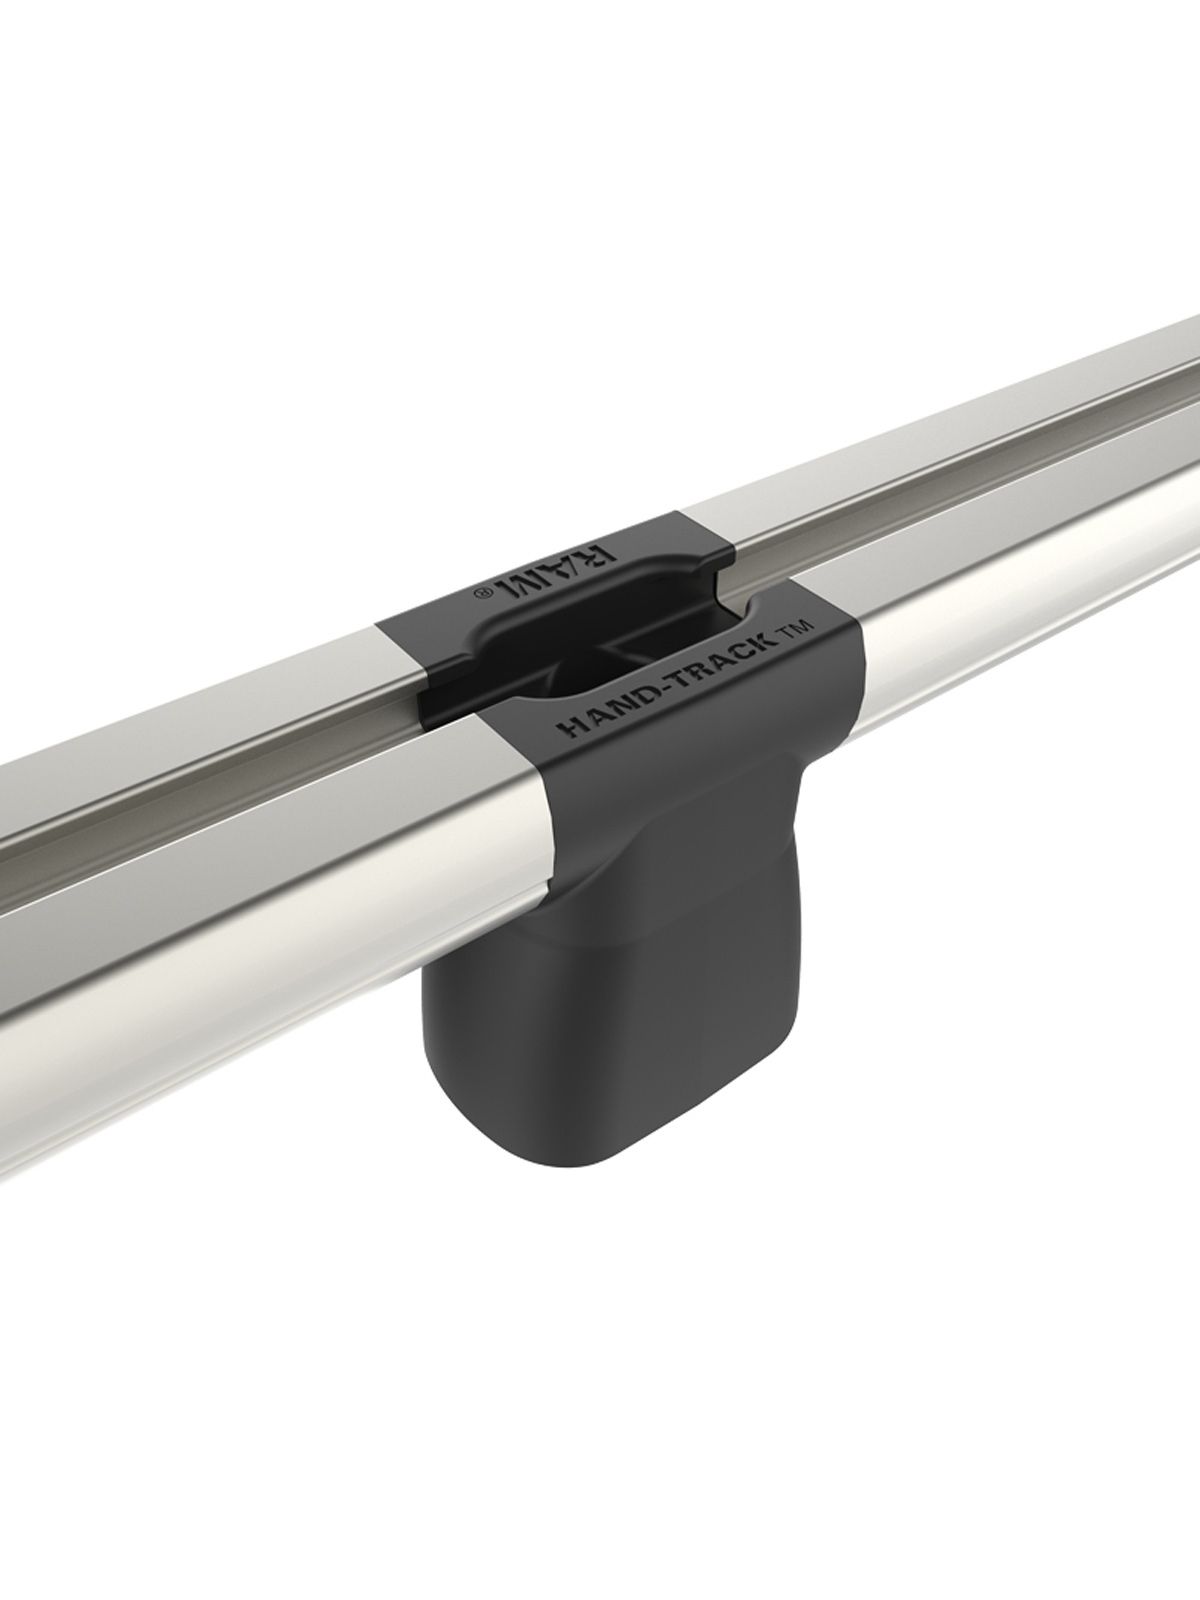 RAM Mounts Hand-Track Erweiterung - Aluminium-Schiene inkl. Steckverbindung, Innenlänge 457,2 mm (18 Zoll), eloxiert